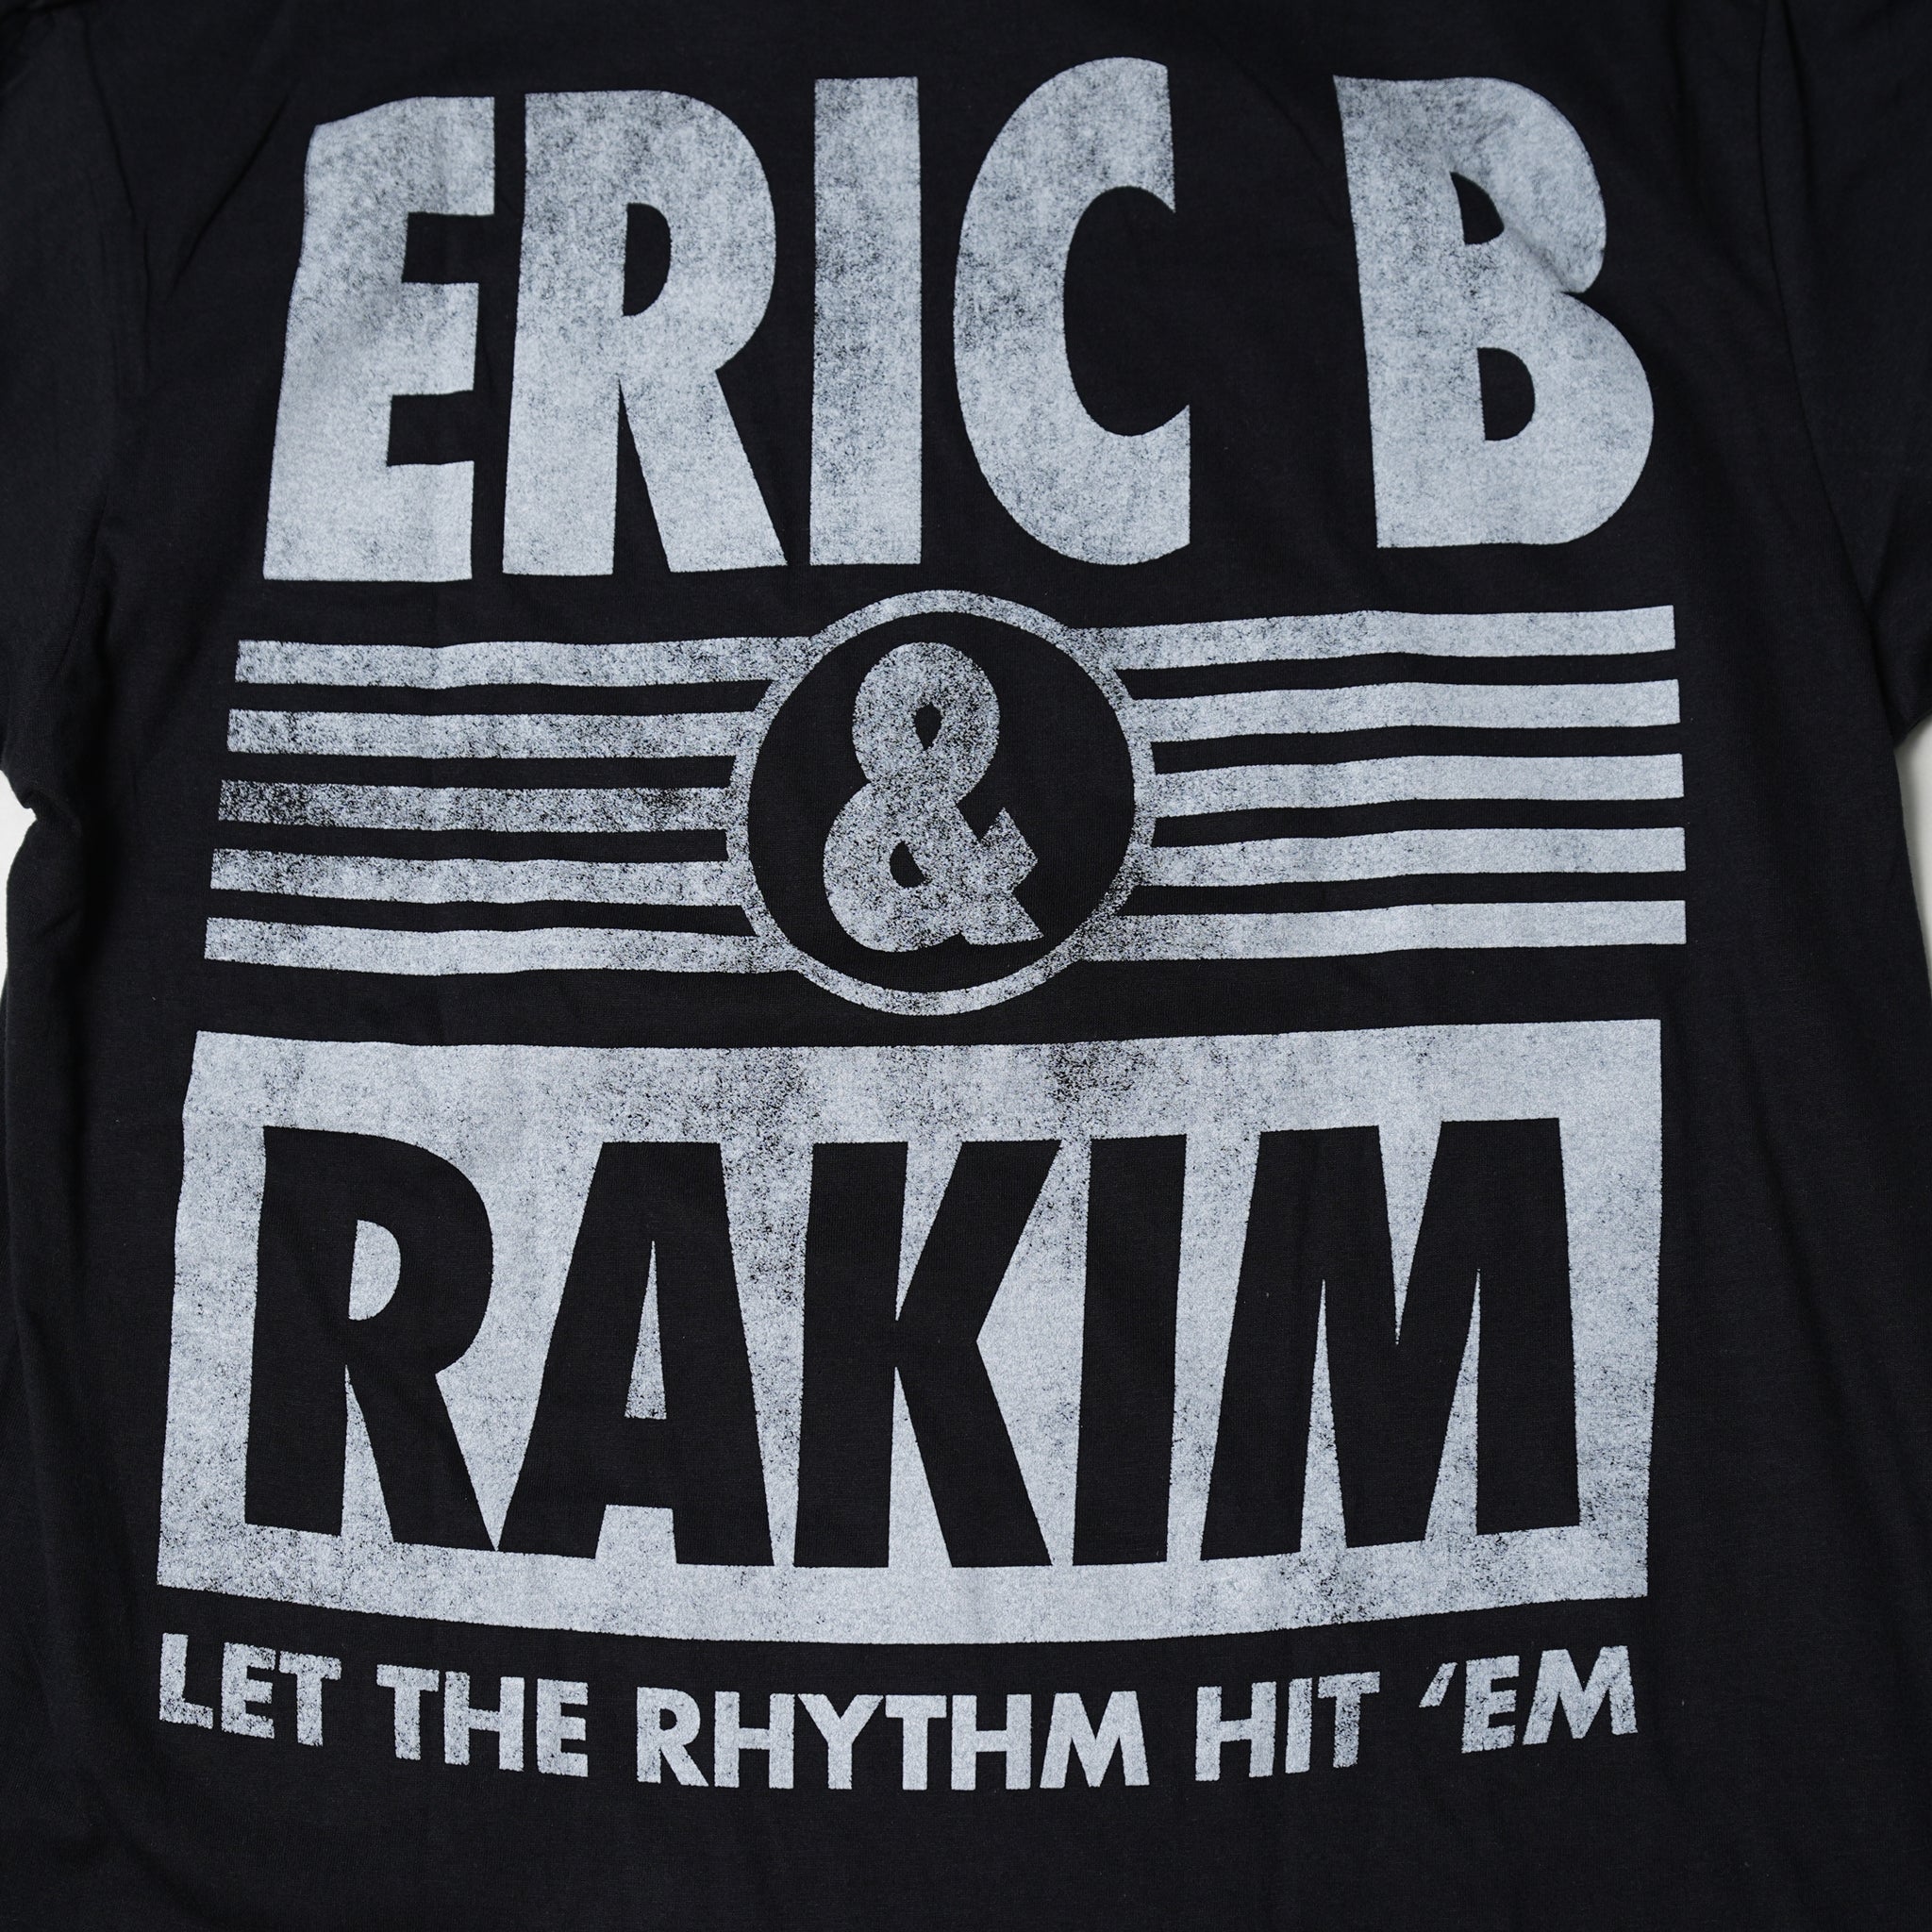 Name:EricB&Rakim_Let The Rhythm Hit 'Em【ROCK OFF】【ネコポス選択可能】